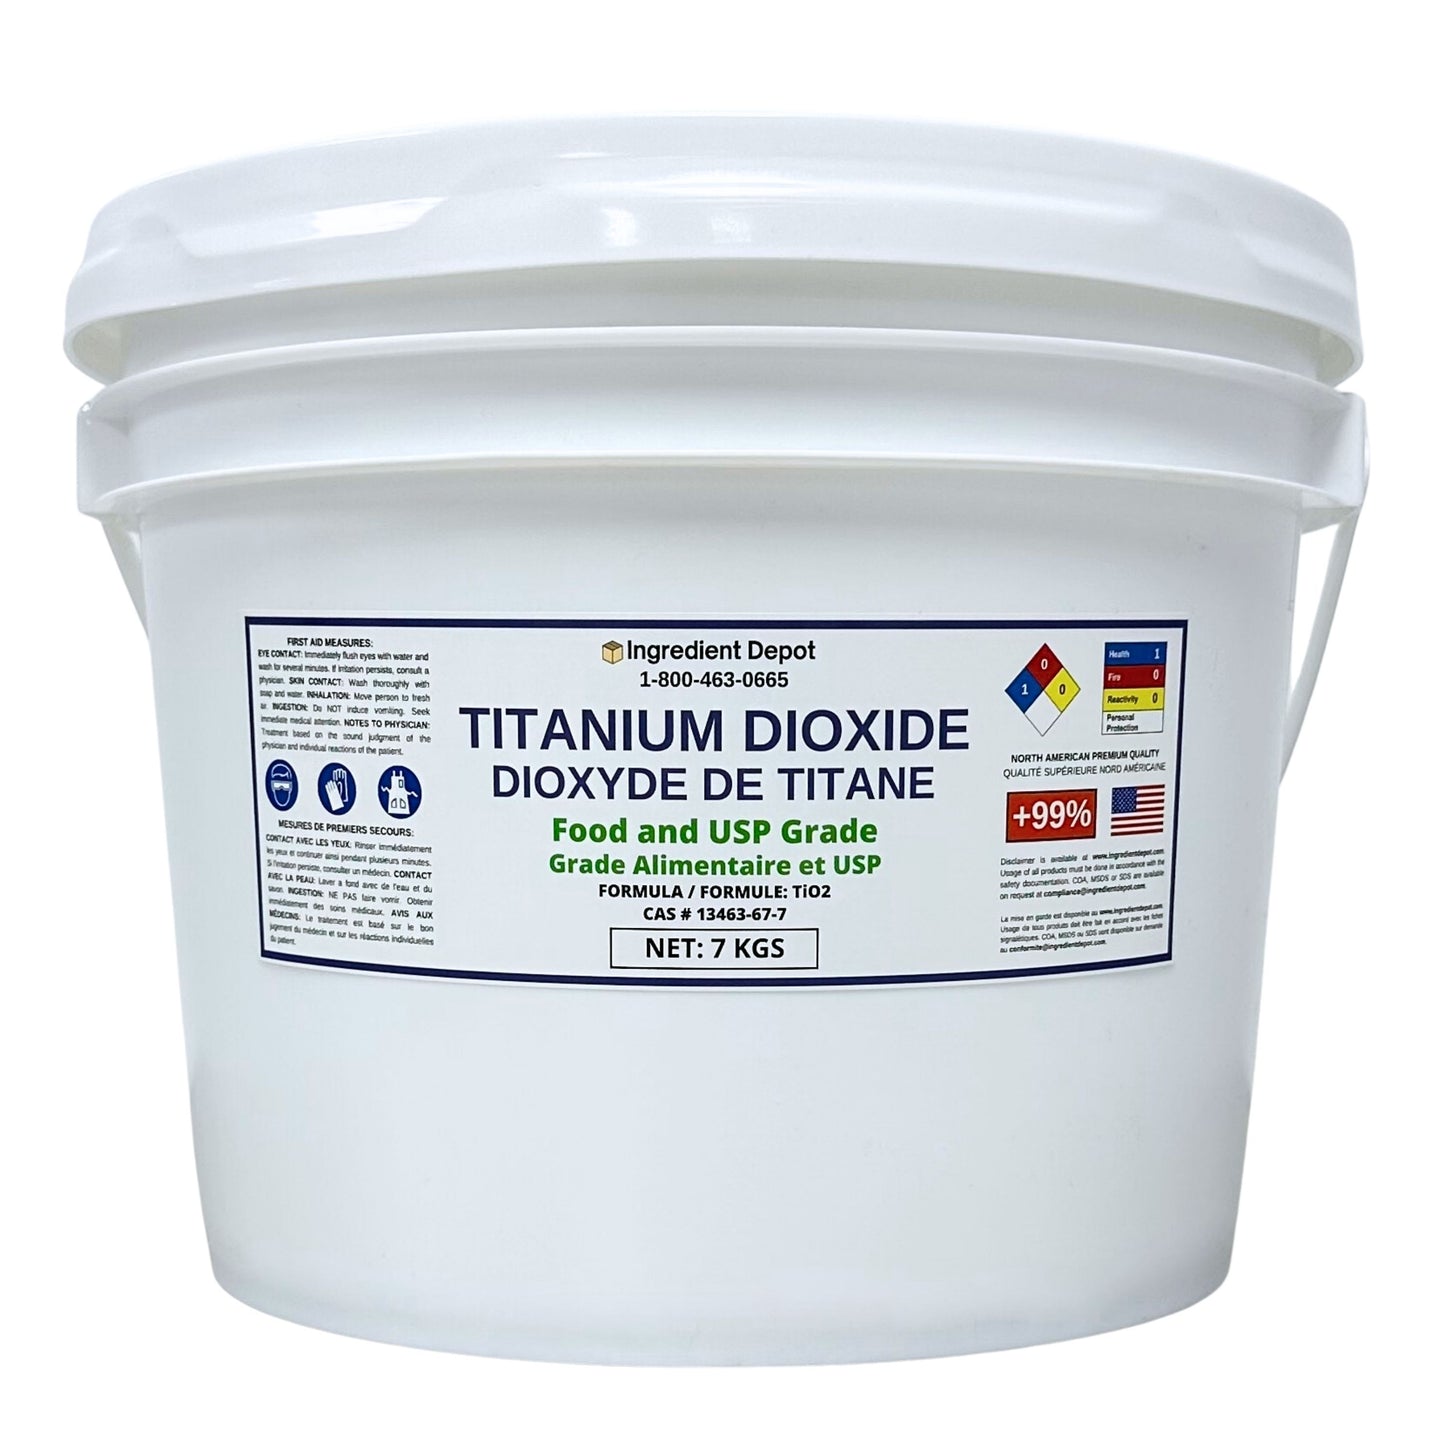 Titanium Dioxide Food and USP Grade 7 kgs - IngredientDepot.com